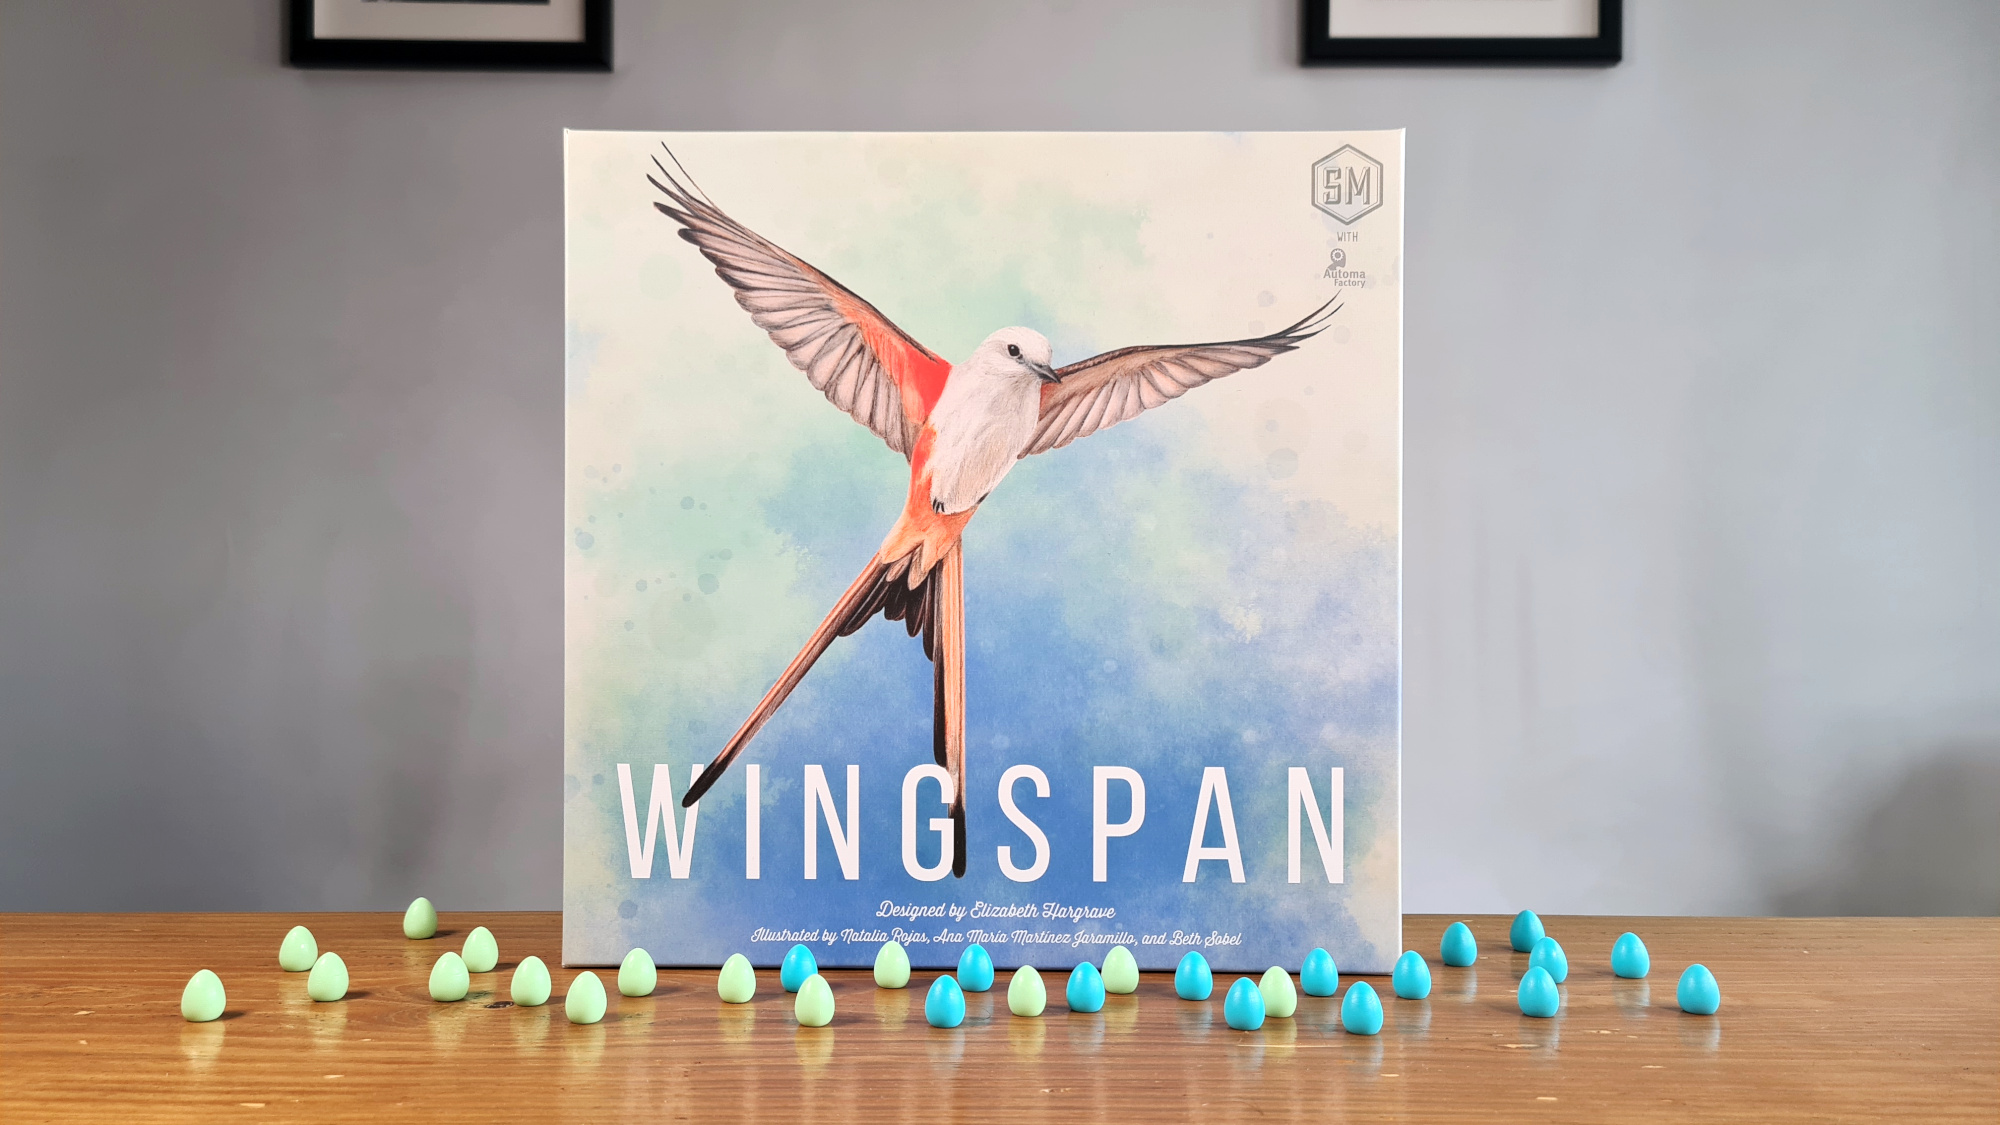 Wingspan Review – Egg-Cellent!